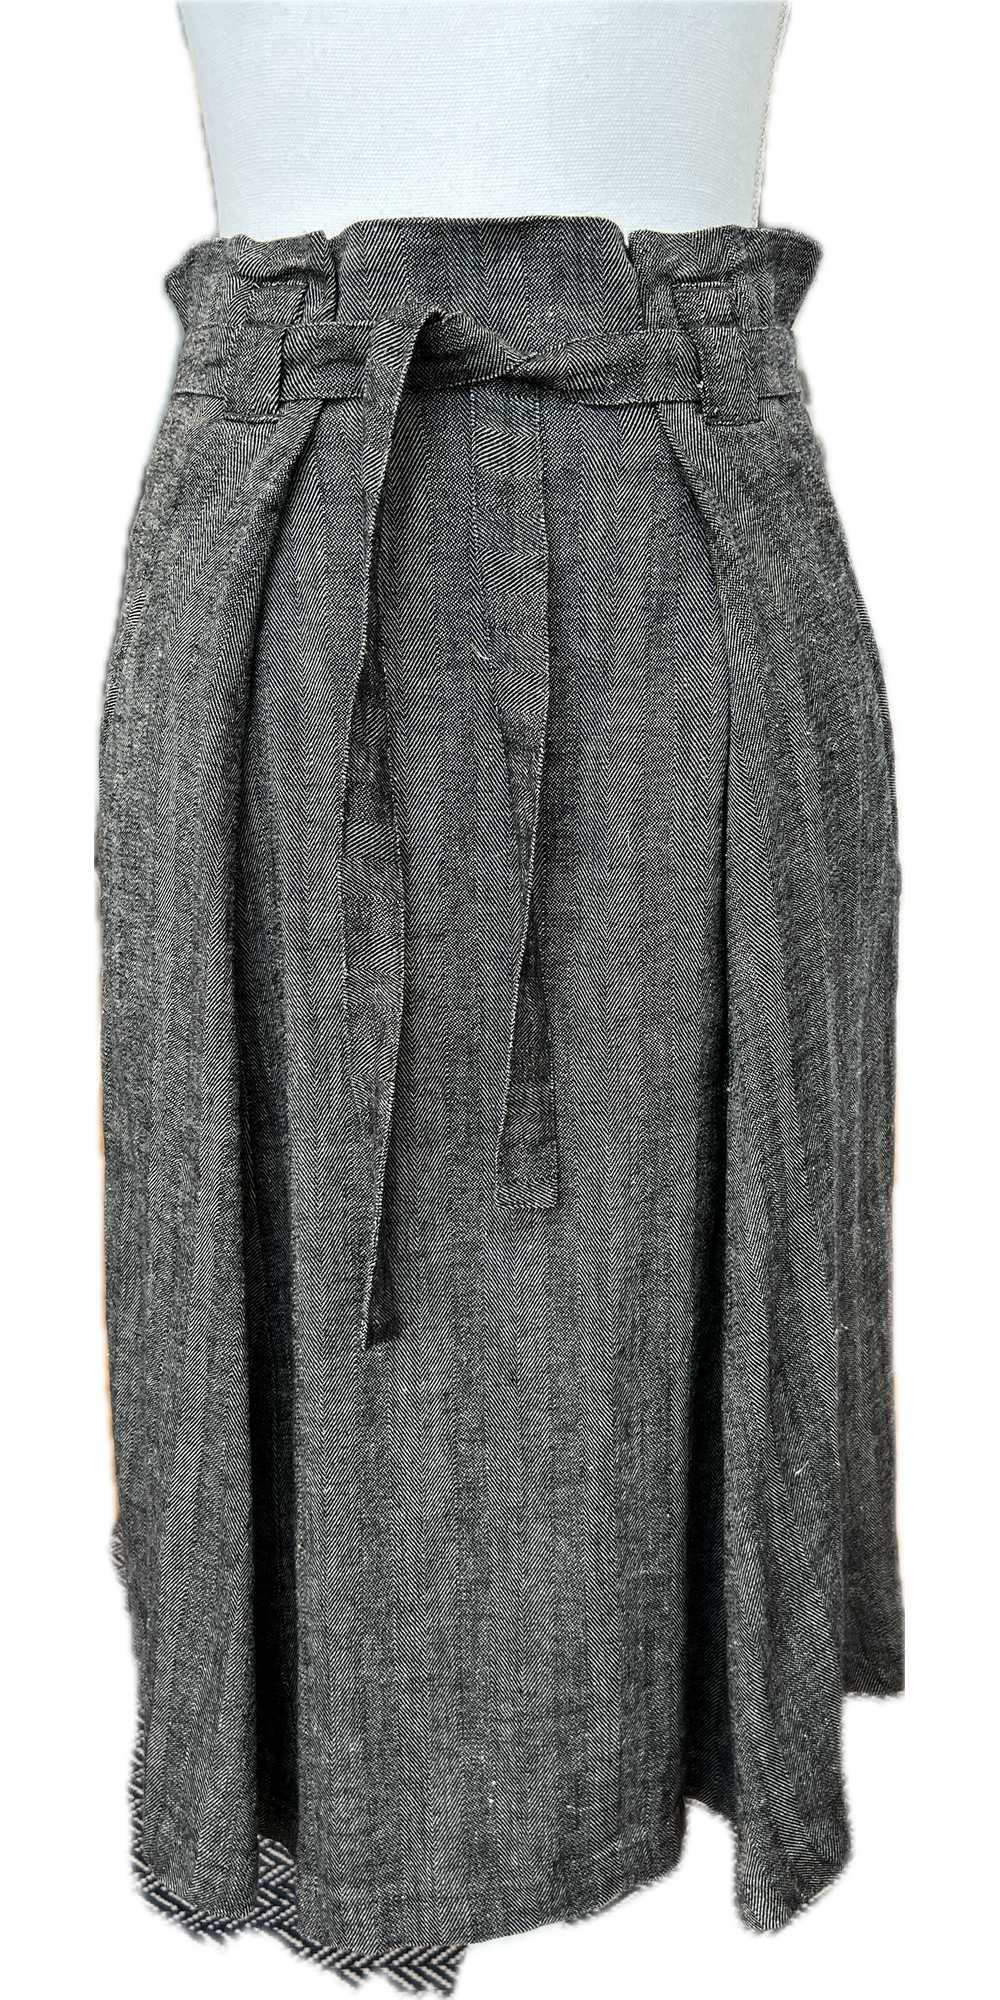 Cotélac Black and Tan Linen Blend Belted Skirt, 0 - image 1